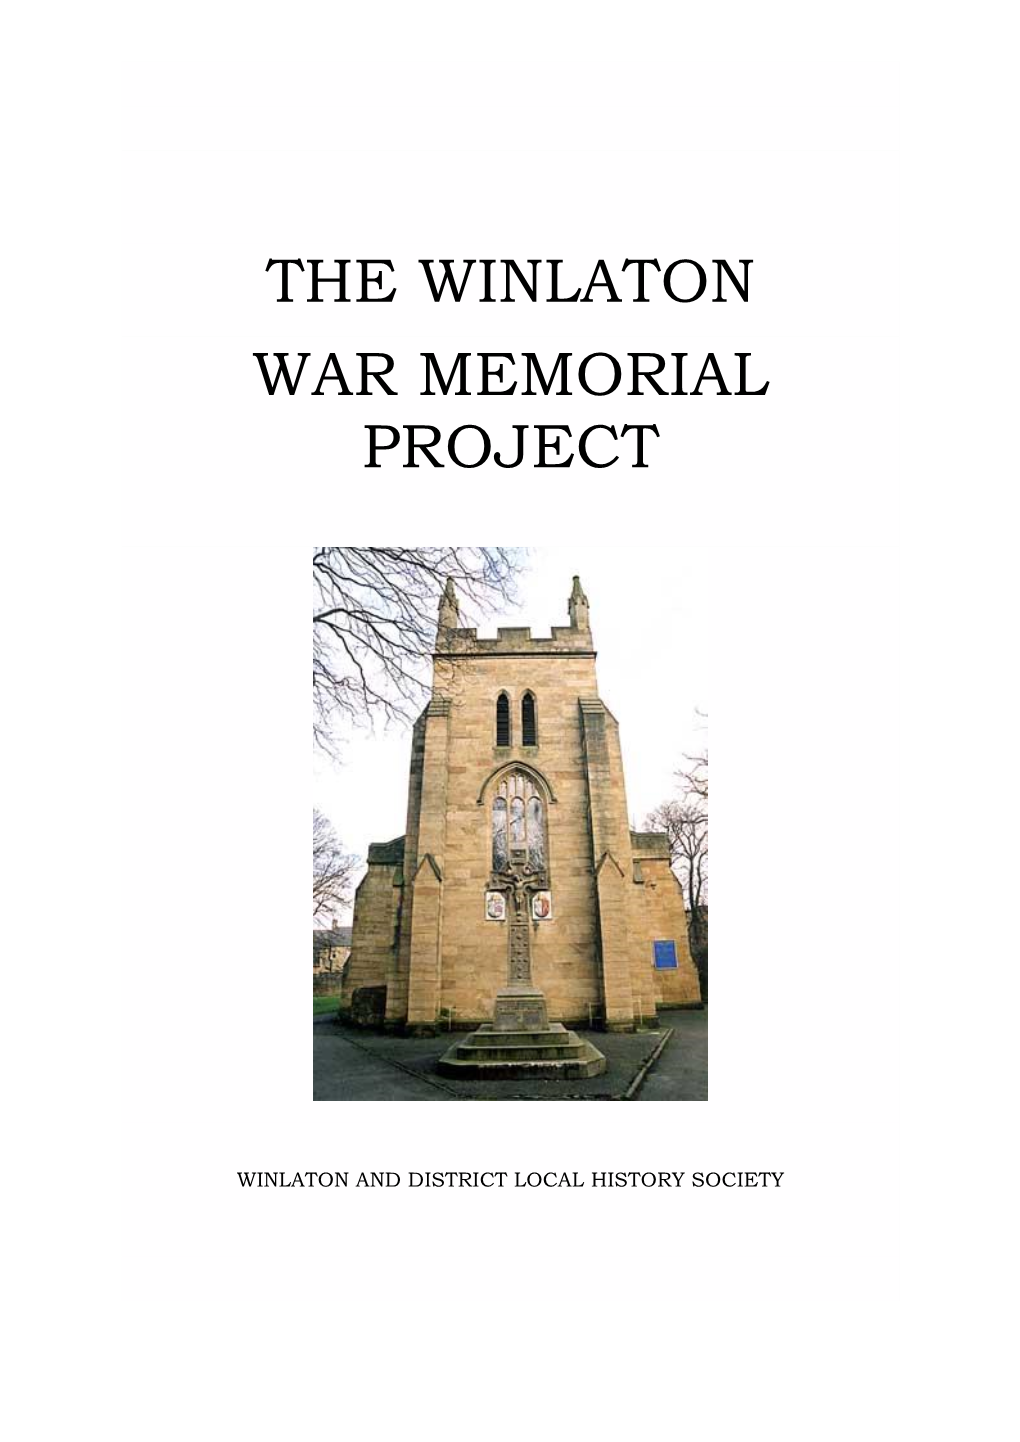 The Winlaton War Memorial Project